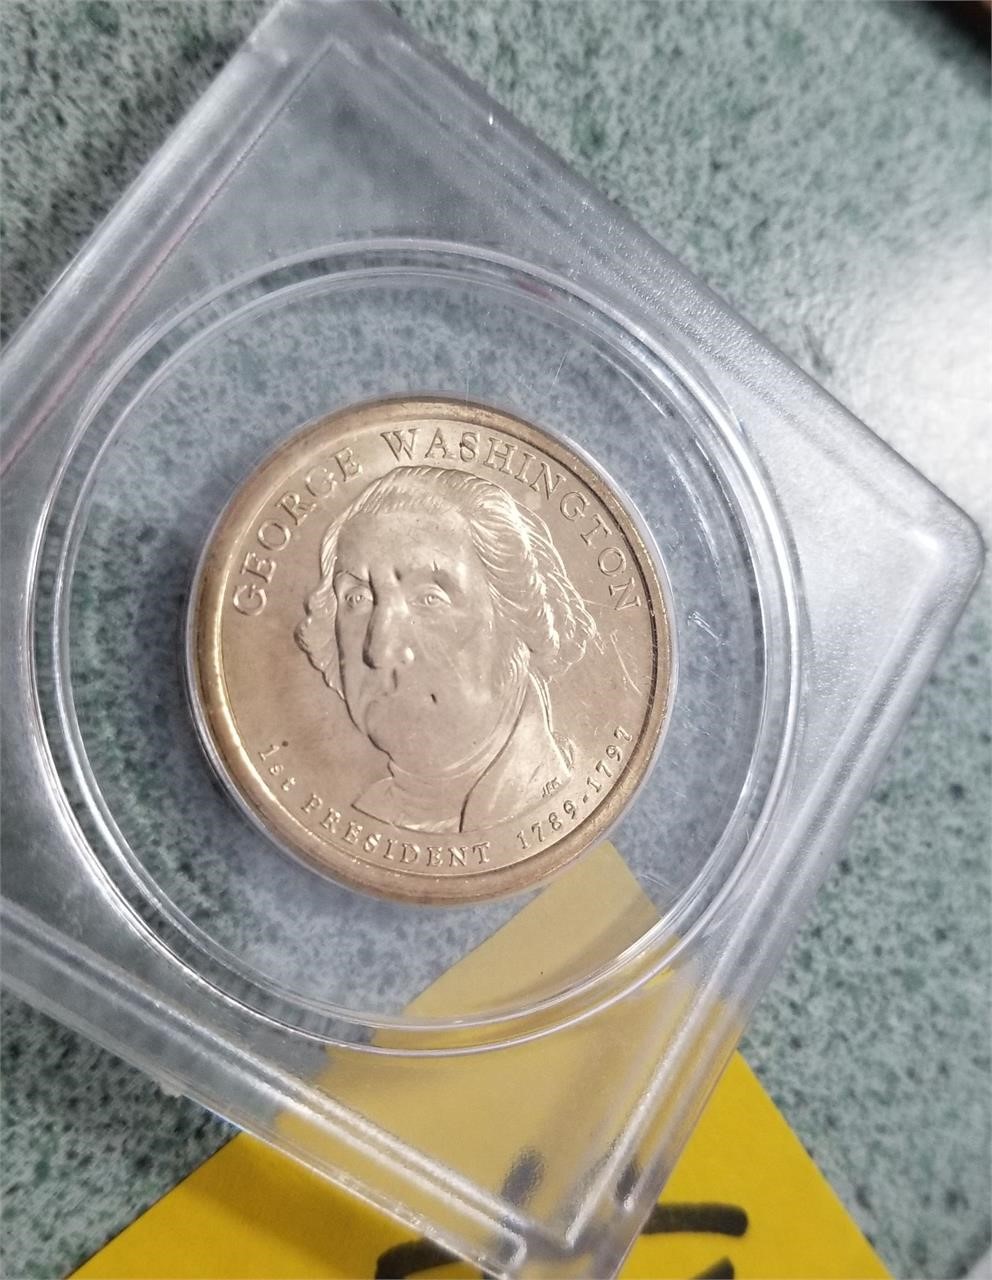 2 George Washington One Dollar Coins